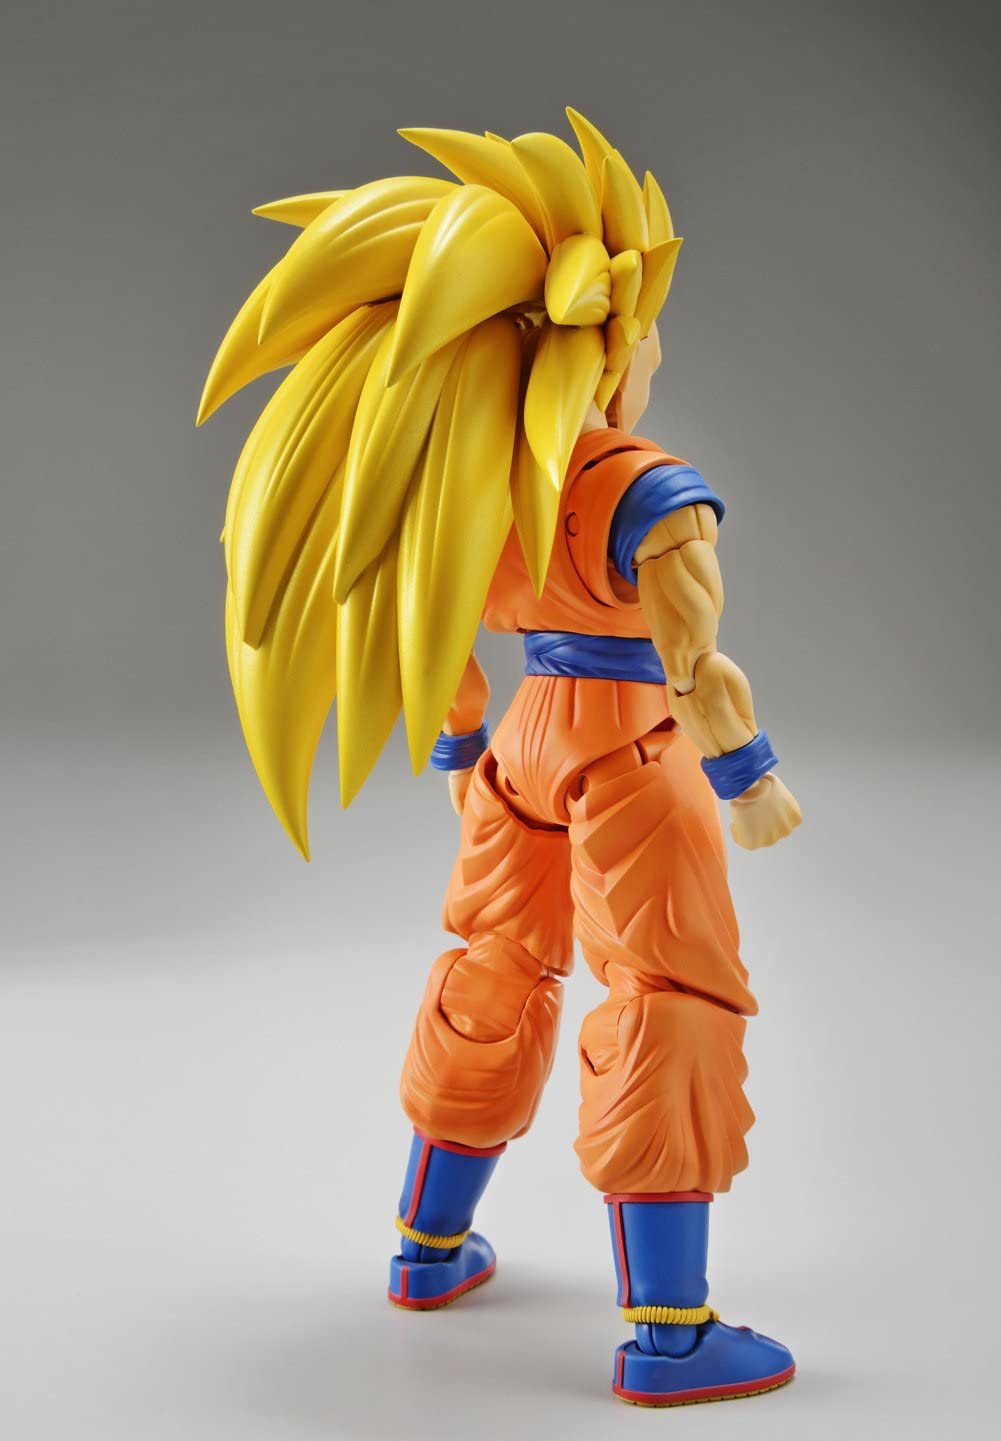 Super Saiyan 3 Goku